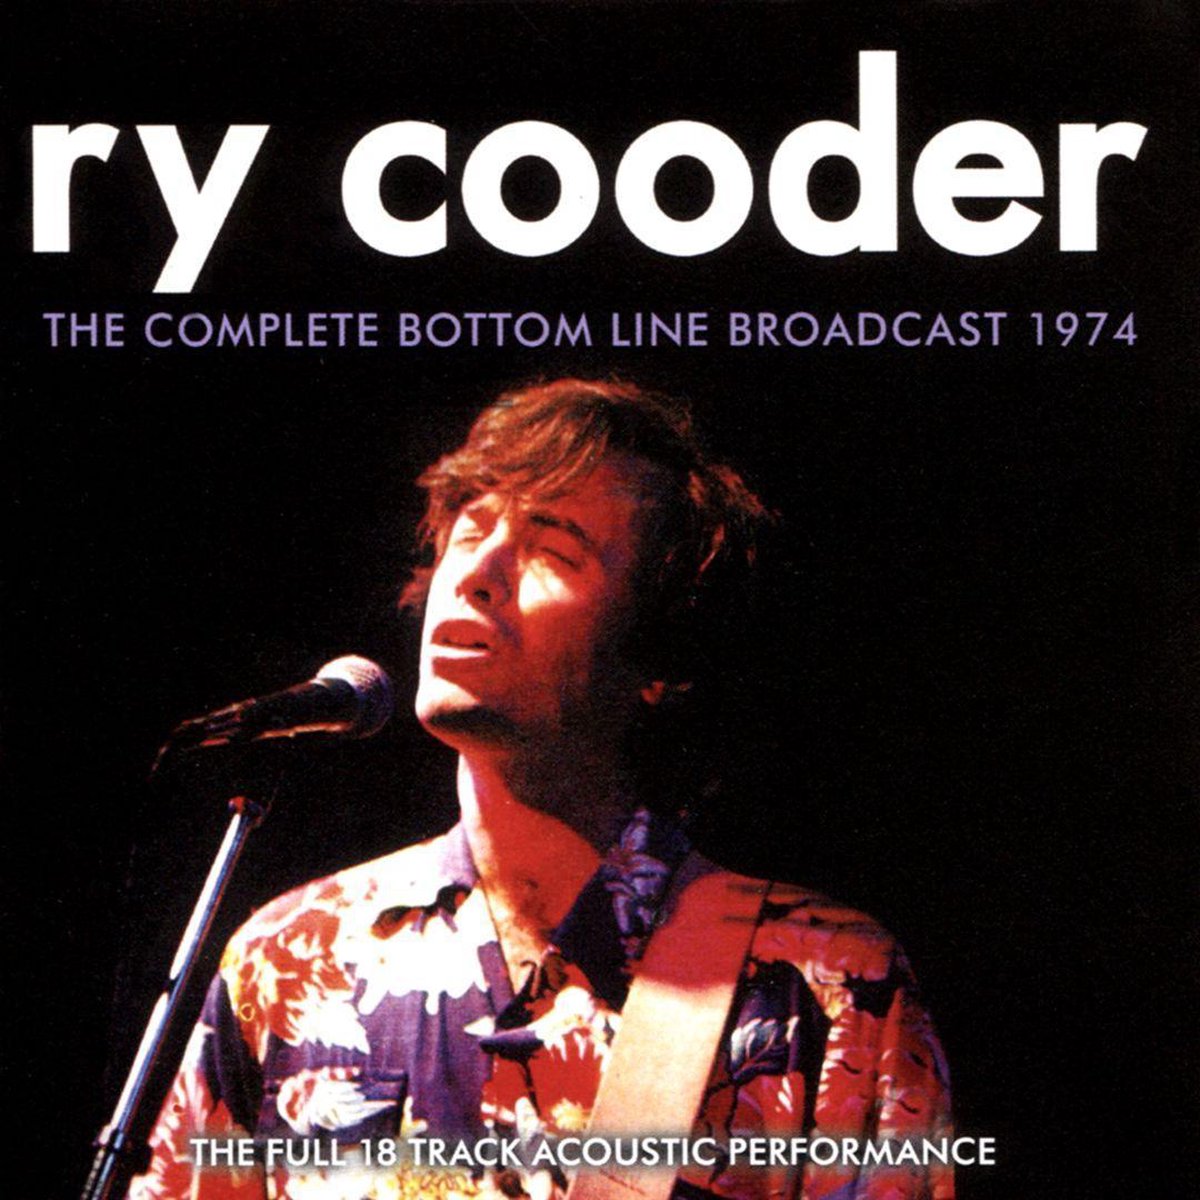 Complete Bottom Line Broadcast 1974 - Ry Cooder